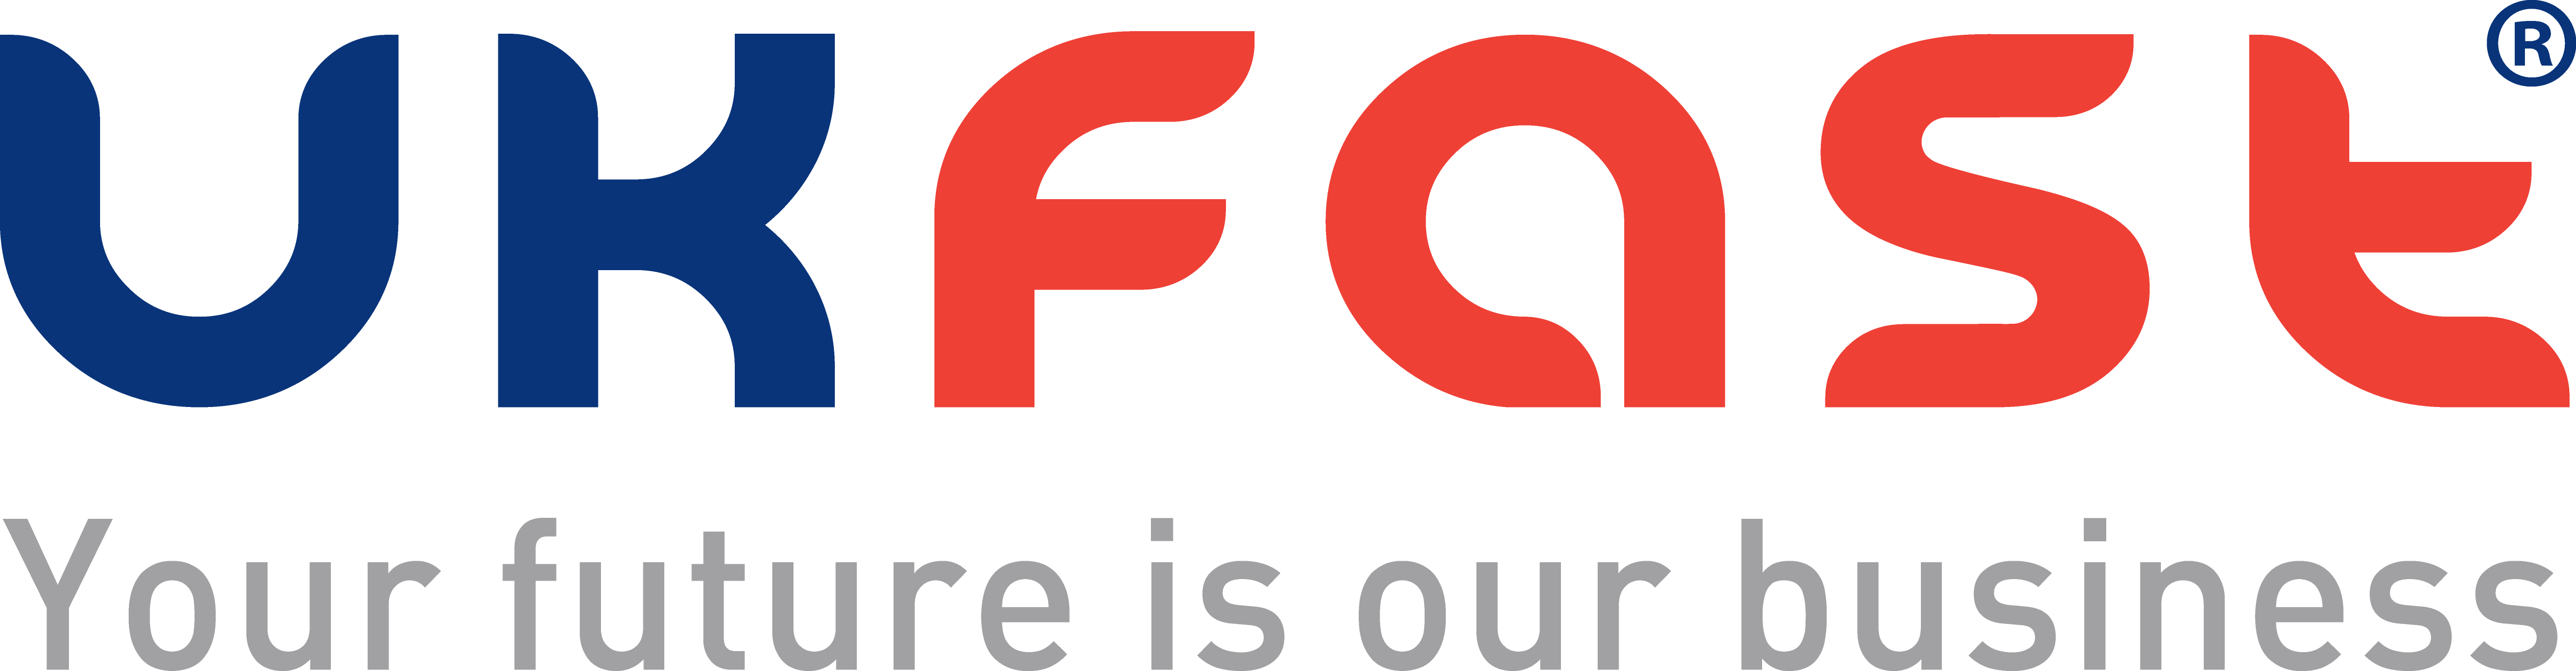 Uk Fast Logo - Graphic Design (5045x1314)